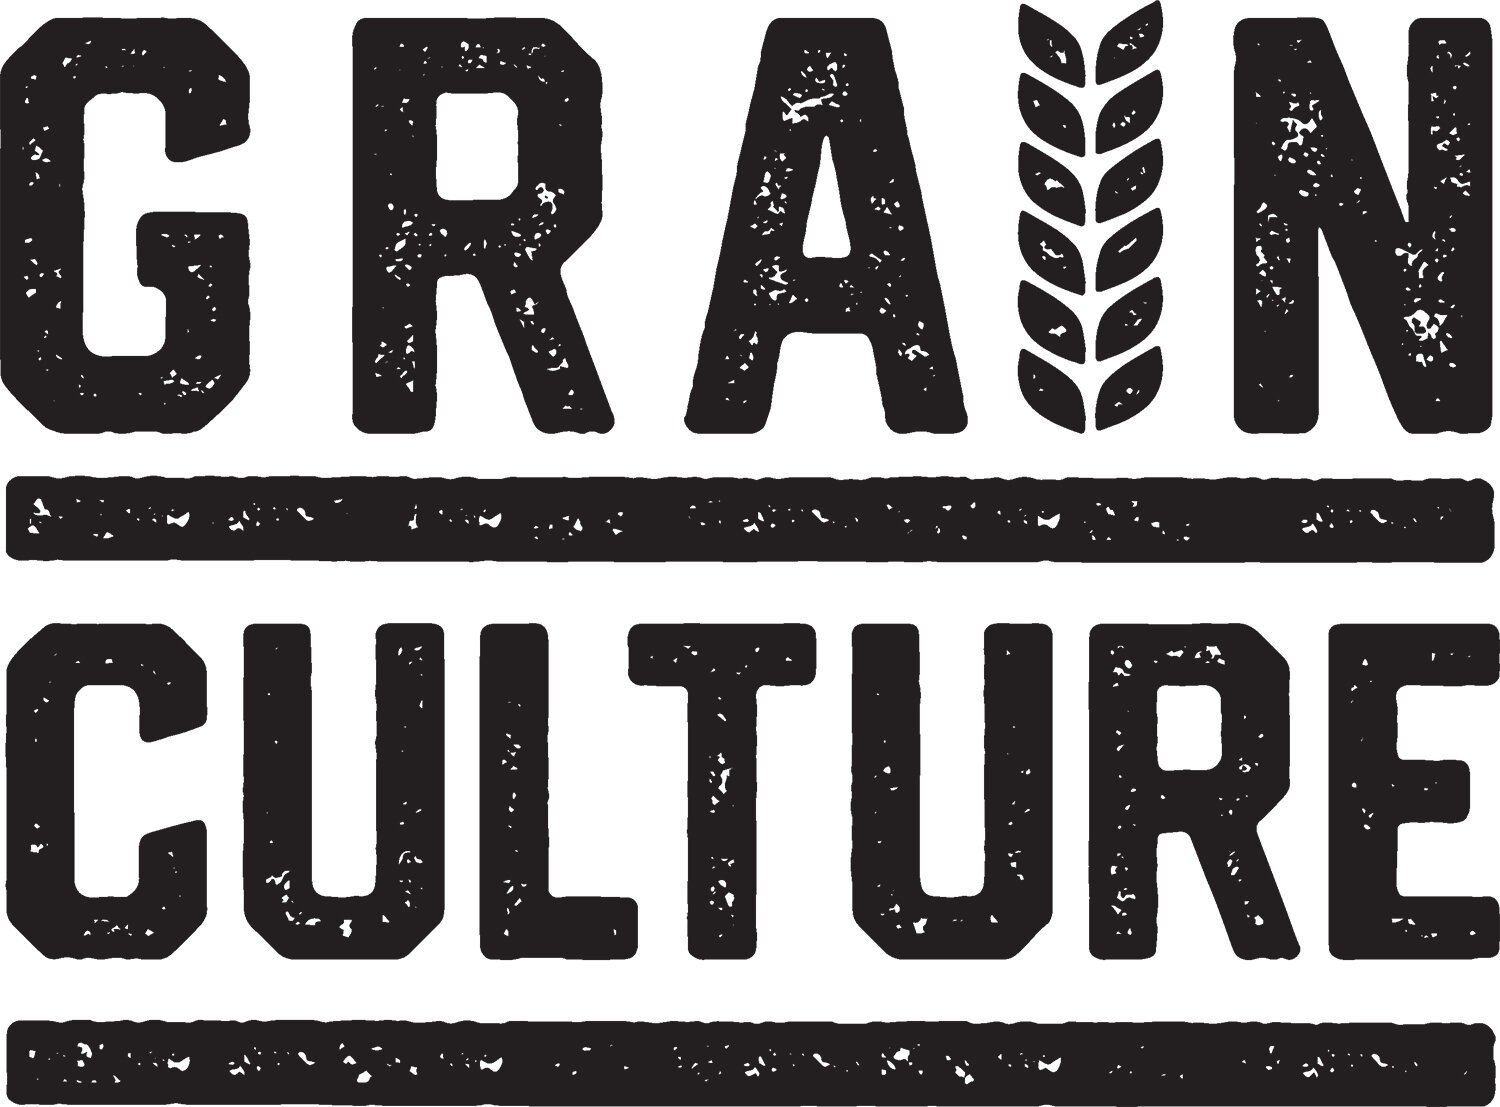 Grain Culture - Bake Shop